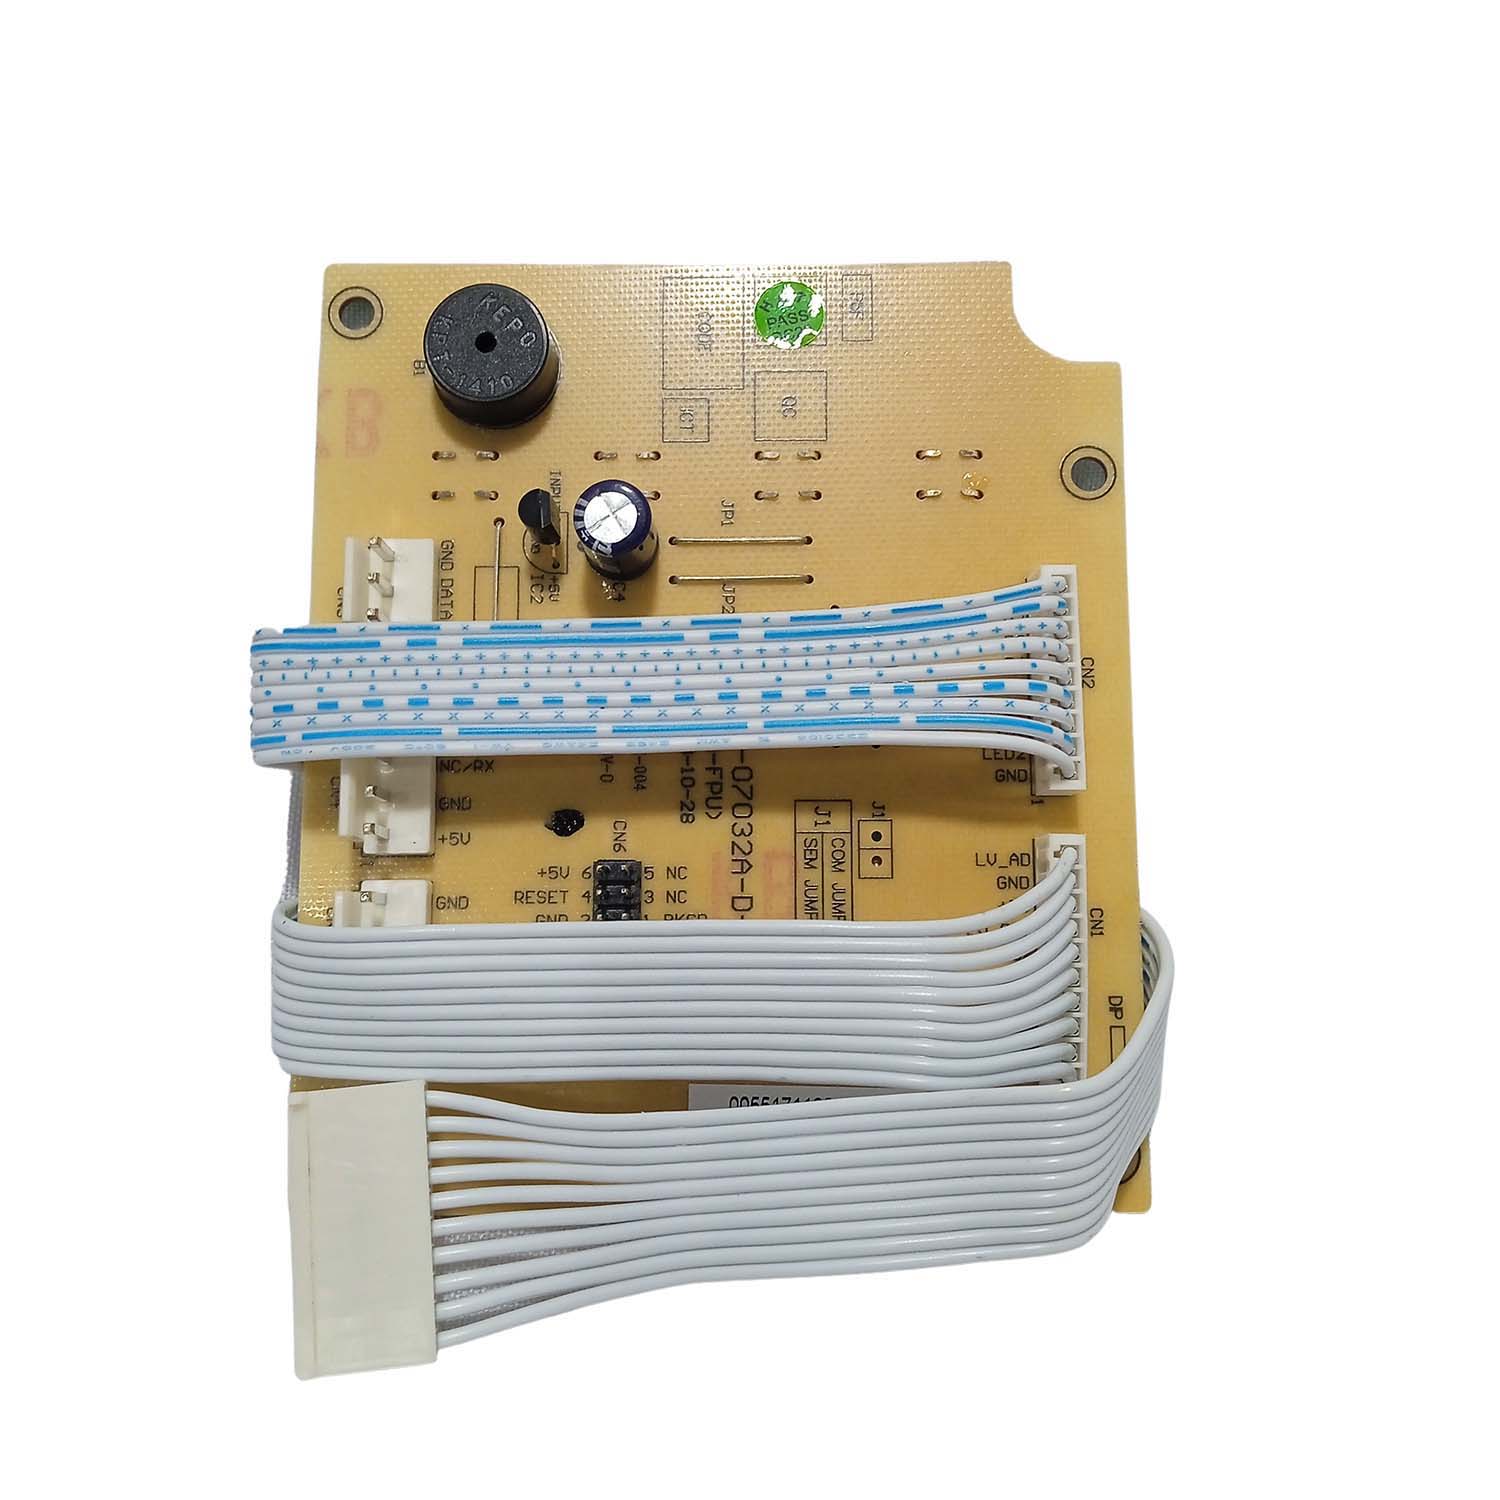 Placa Interface Electrolux Original Lta15 64800260